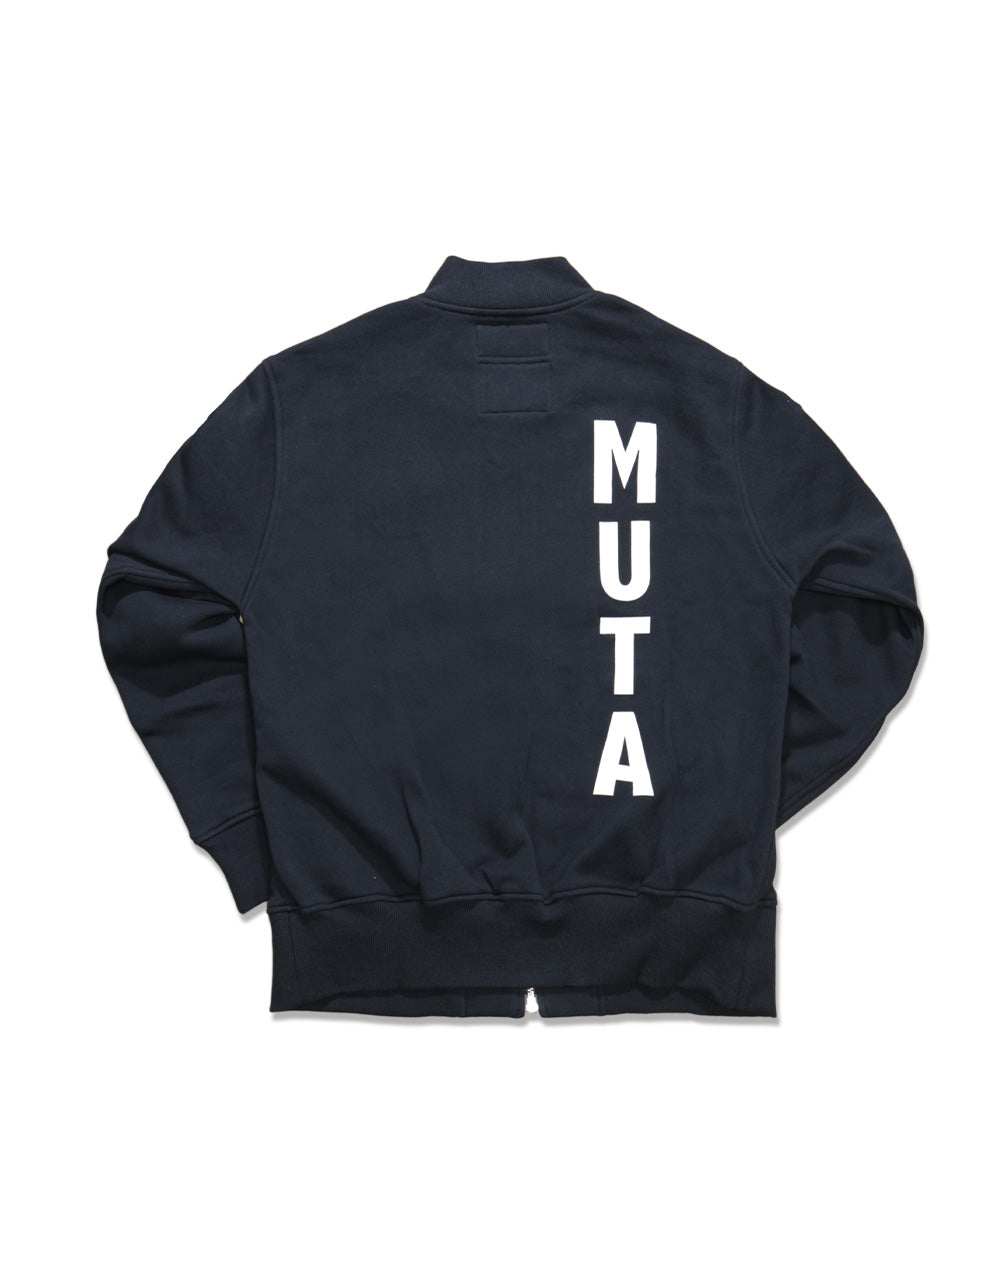 ACANTHUS x muta MARINE Sweat MA-1 [全2色] – muta Online Store